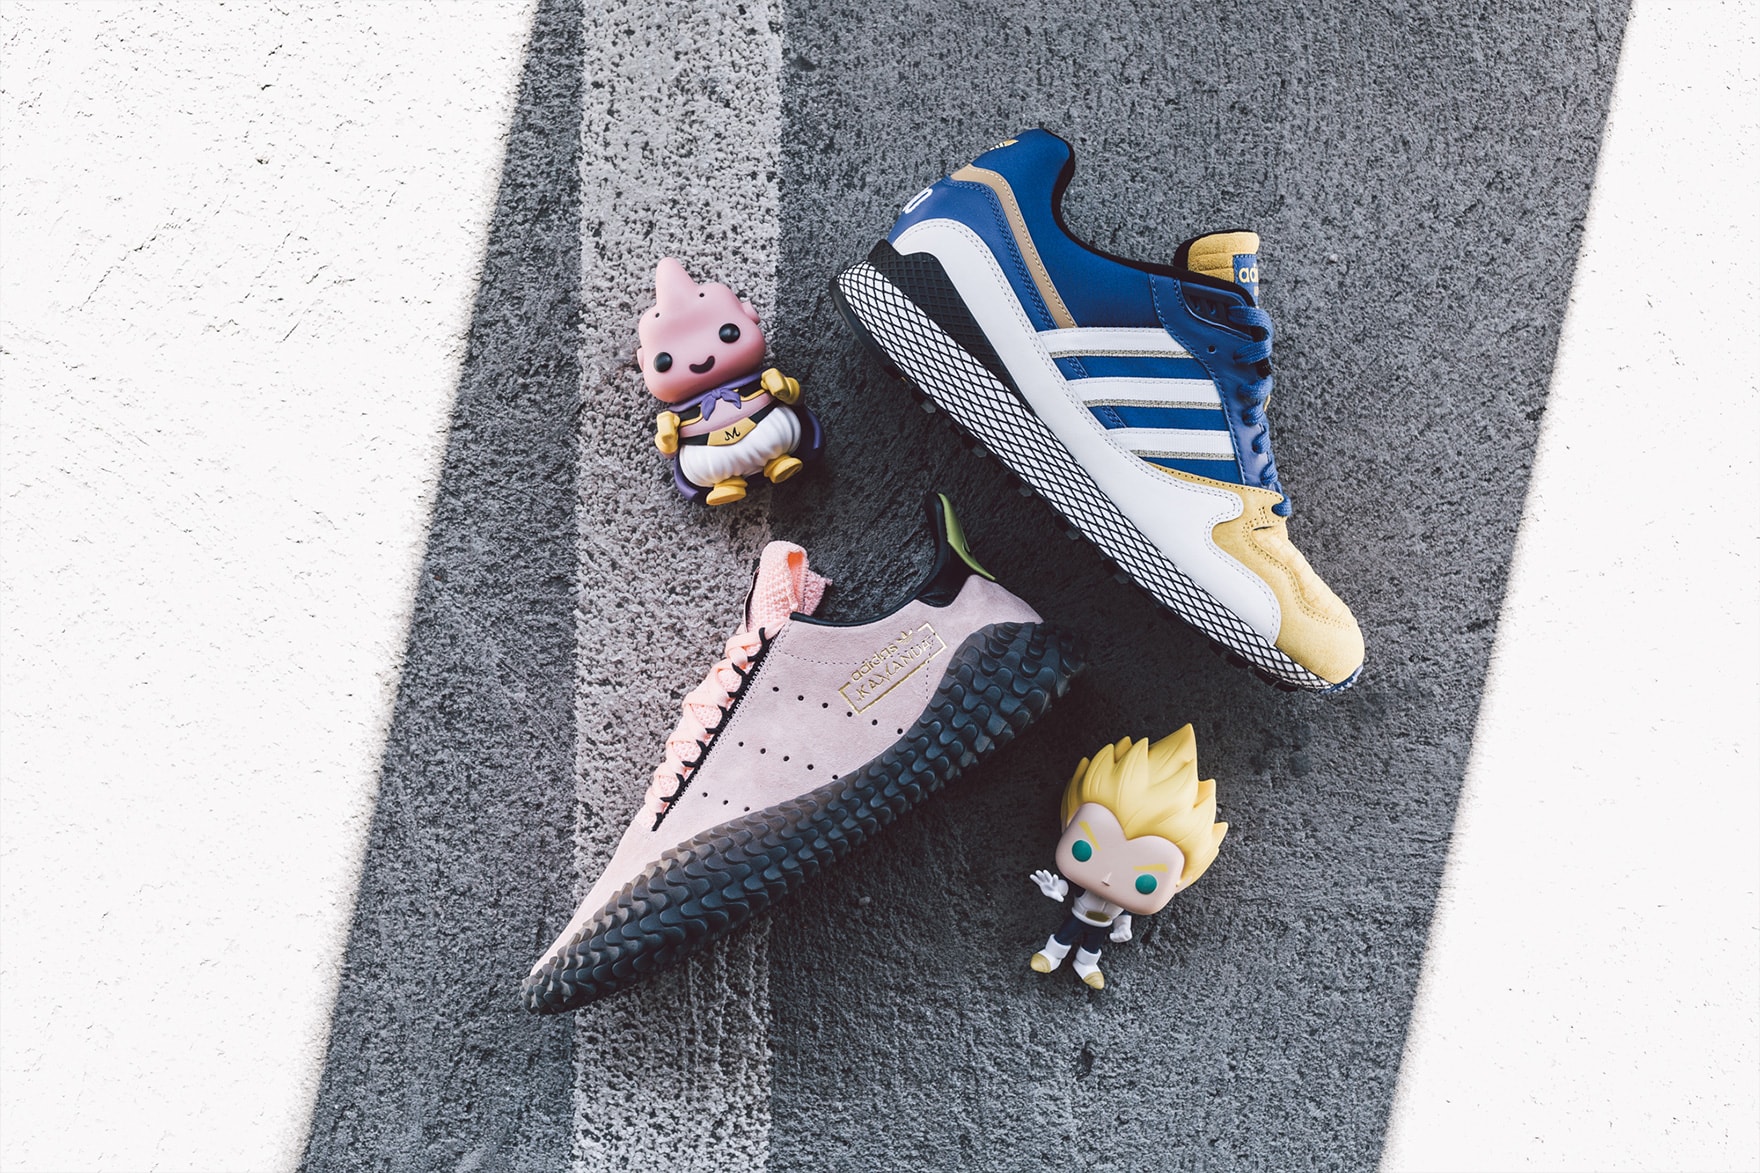 'Dragon Ball Z' x adidas Full Collection BAIT sneaker release date info ZX 500 RM "Goku" Yung-1 "Freiza" EQT Support ADV Primeknit "Shenron" Deerupt "Son Gohan" Prophere "Cell" Kamanda "Majin Buu" Ultra Tech "Vegeta"